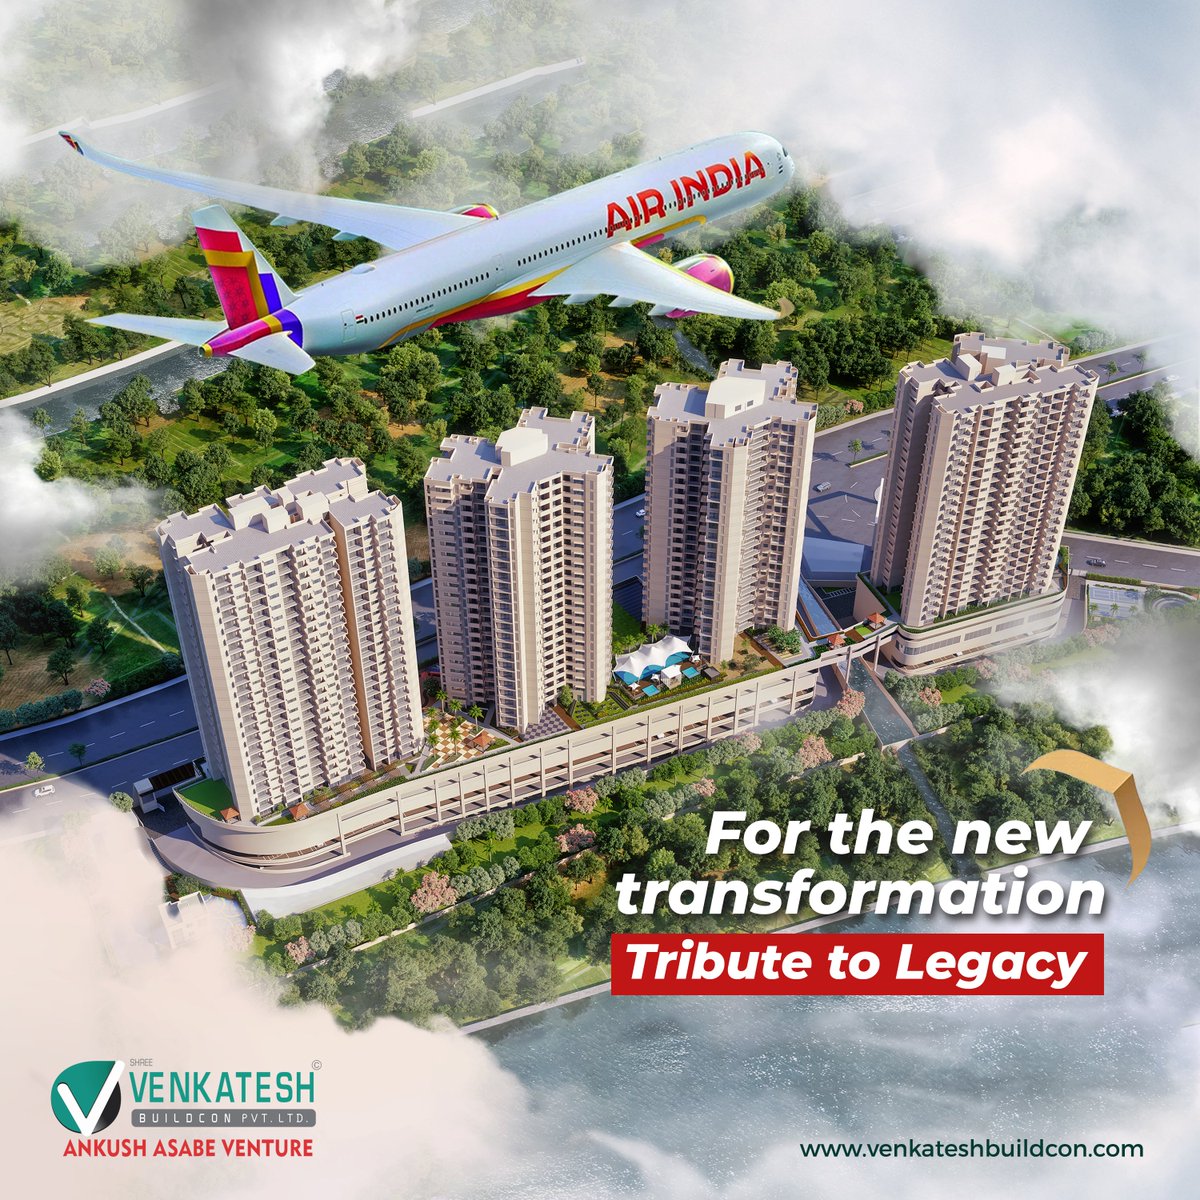 Embracing the Skies - Air India's Timeless Legacy Soars Onward in a New Era of Transformation. 
.
.
#Venkateshbuildcon #punerealestate #FlyAI #NewAirIndia #tributetolegacy #FlyingThroughTime #AirIndia #transformation #twitter #TransformationTribute #ModernAviation #InfiniteSkies